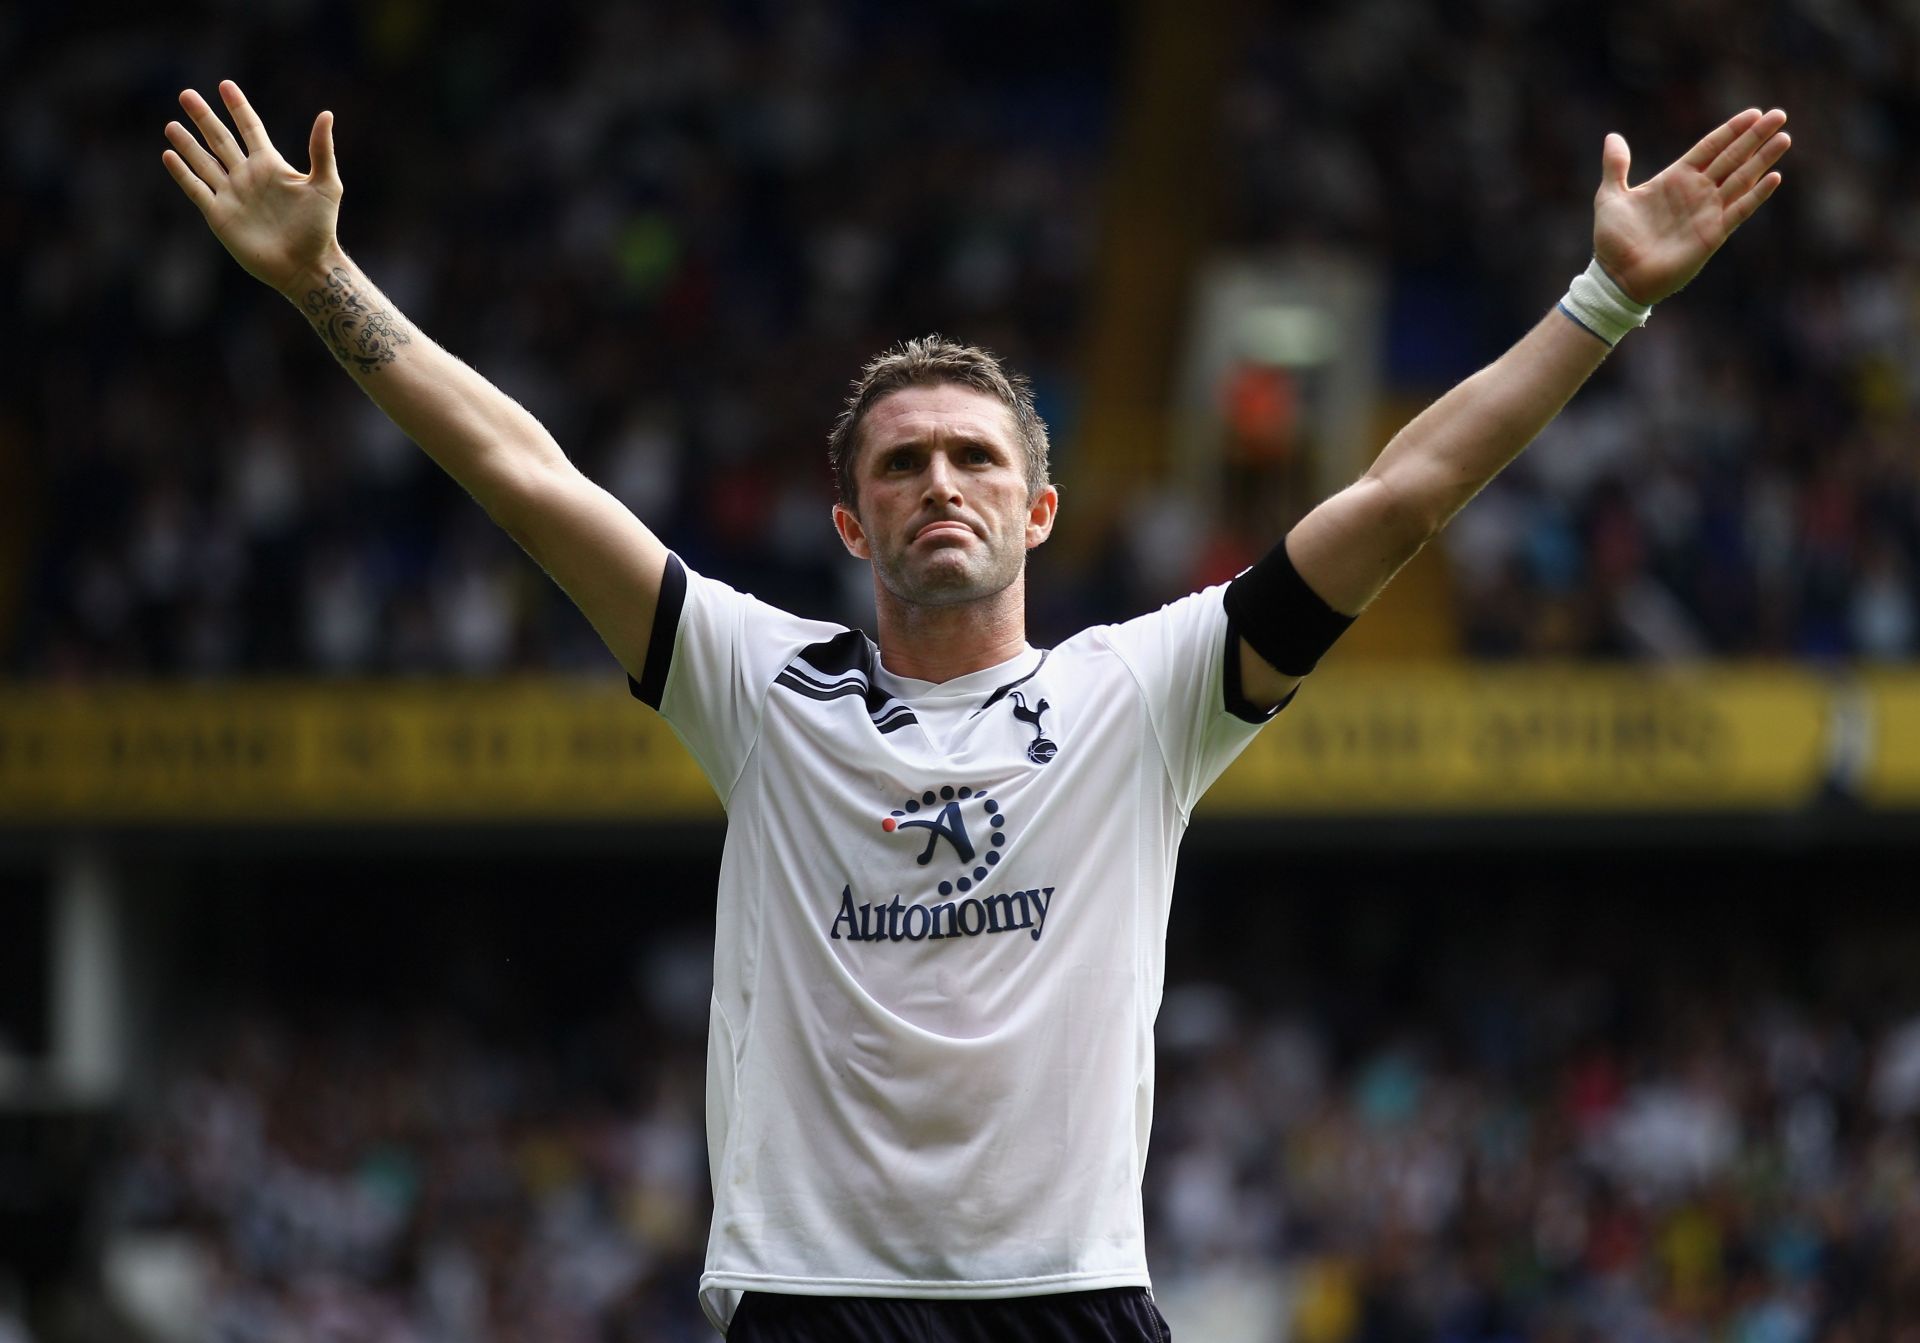 Keane got his 100th league goal with Spurs